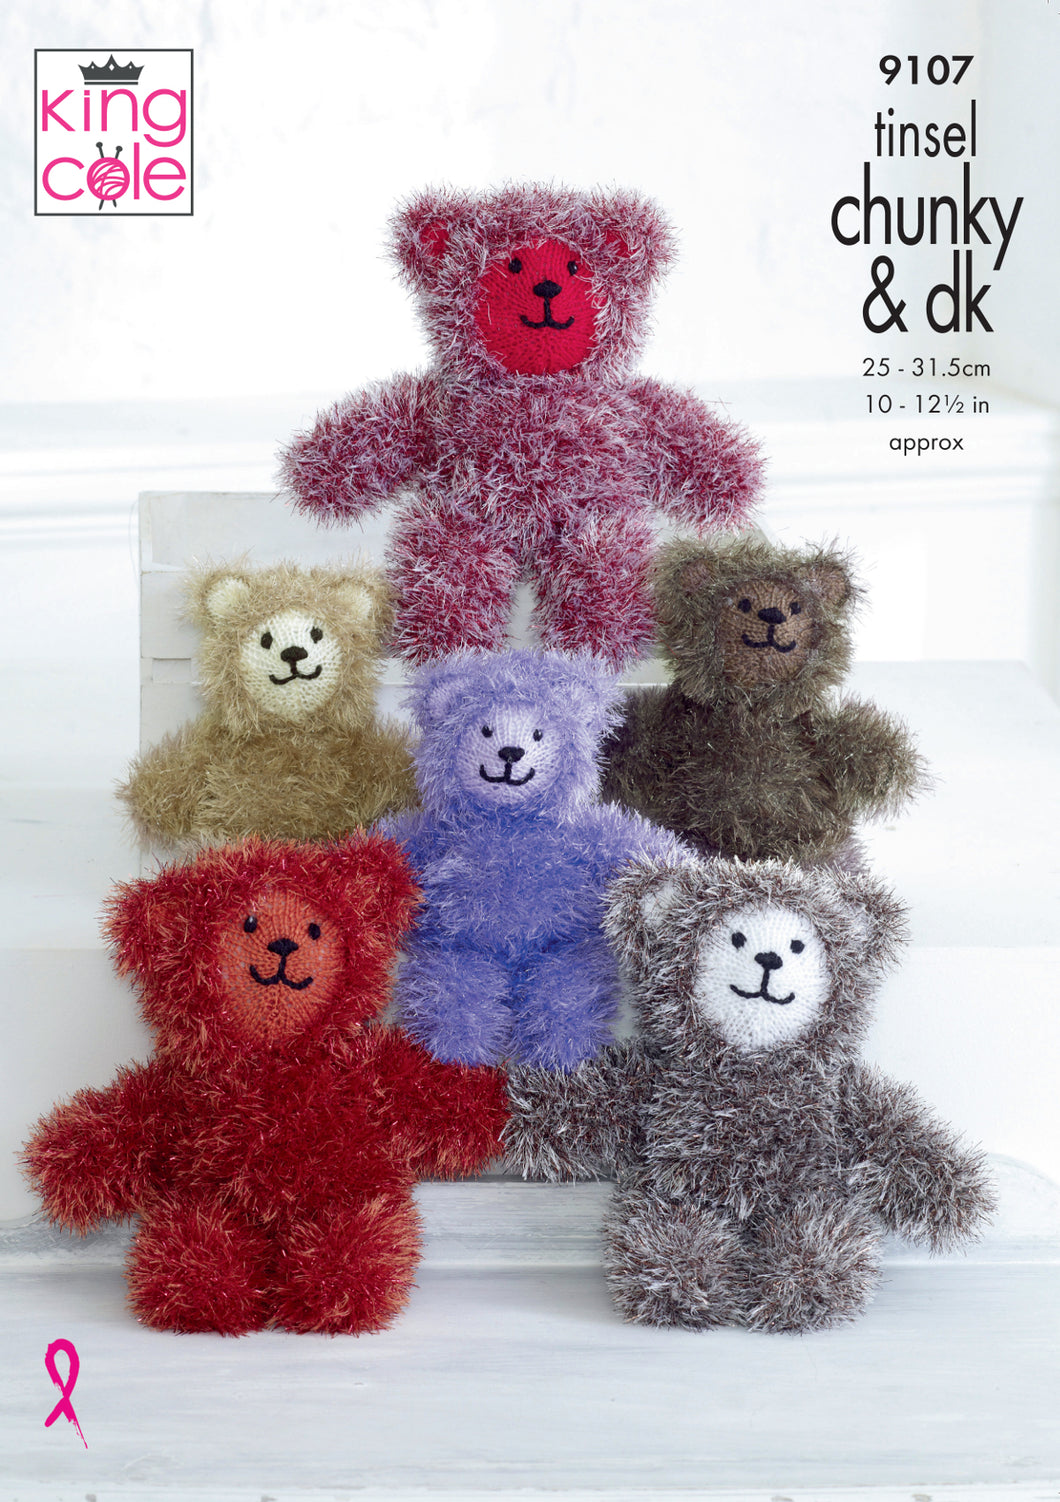 https://images.esellerpro.com/2278/I/170/620/king-cole-chunky-knitting-pattern-teddy-bears-9107.jpg